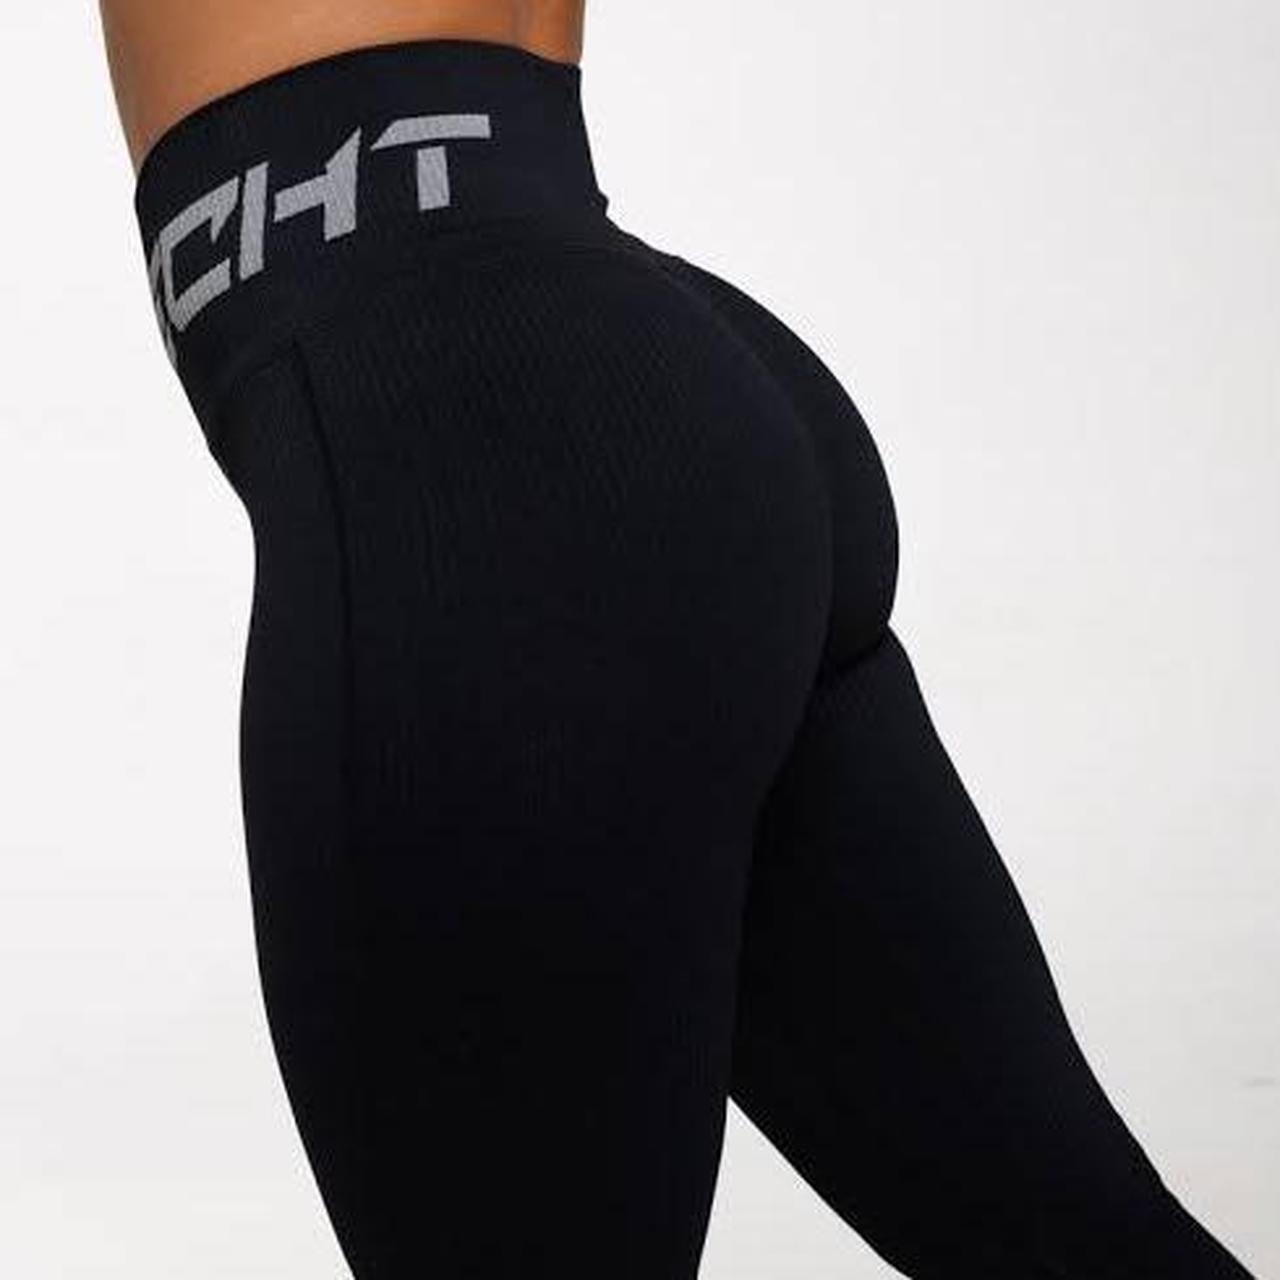 Echt Arise Comfort Leggings Black, Size XS 6, Brand